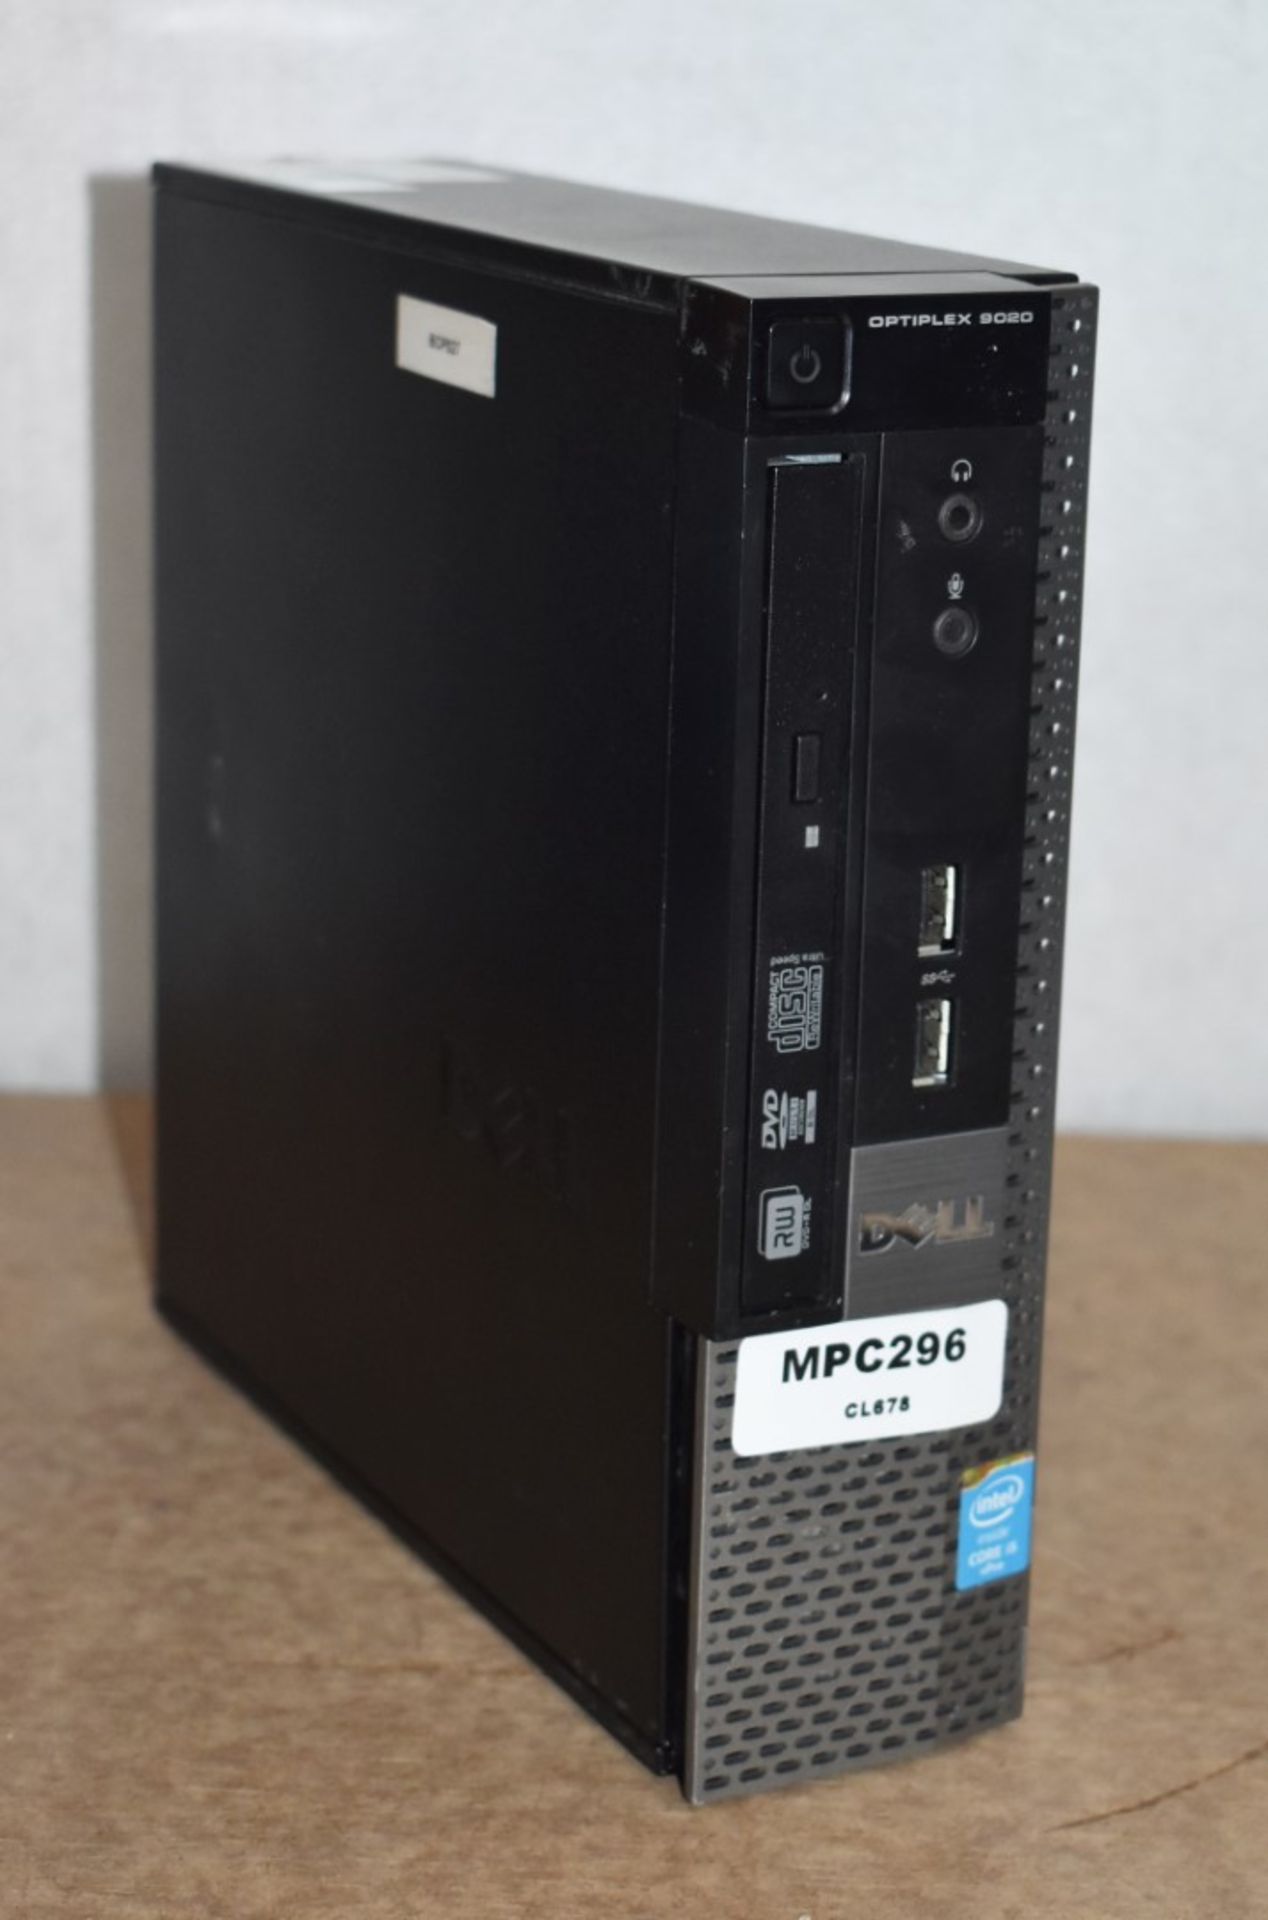 1 x Dell Optiplex 9020 Small Form Fact Desktop Computer - Features an Intel i5-4590S Quad Core - Image 3 of 4